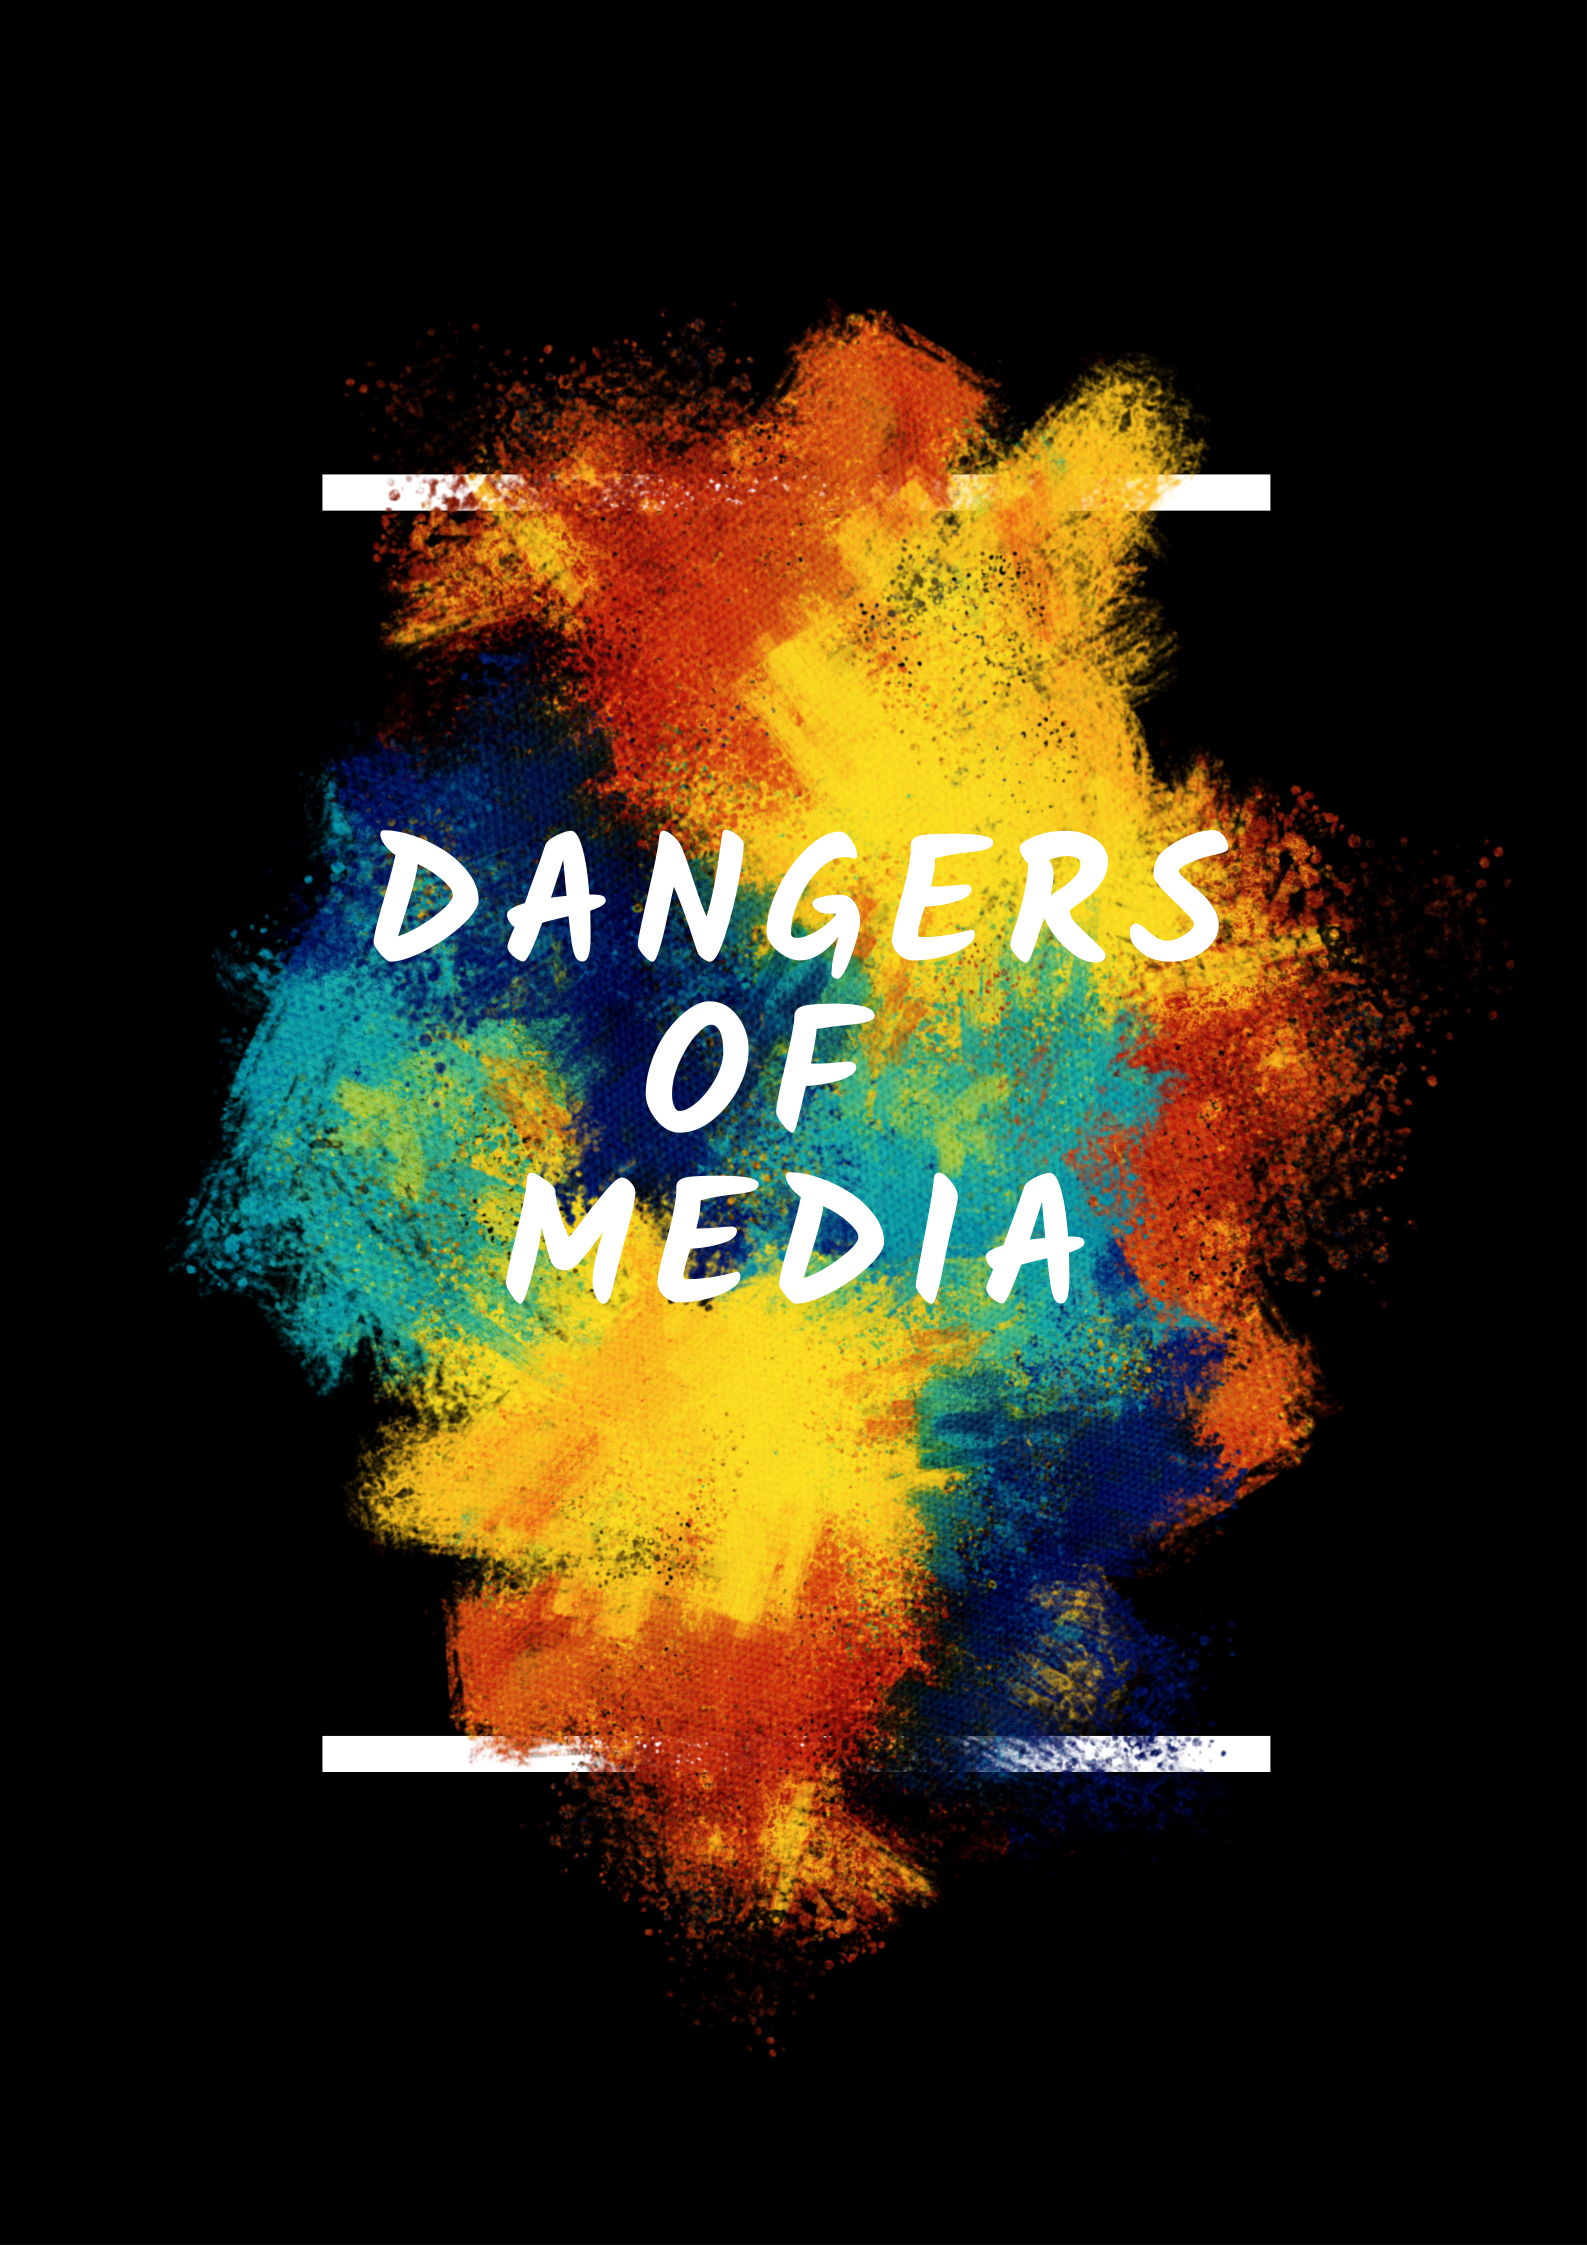 DANGERS OF MEDIA